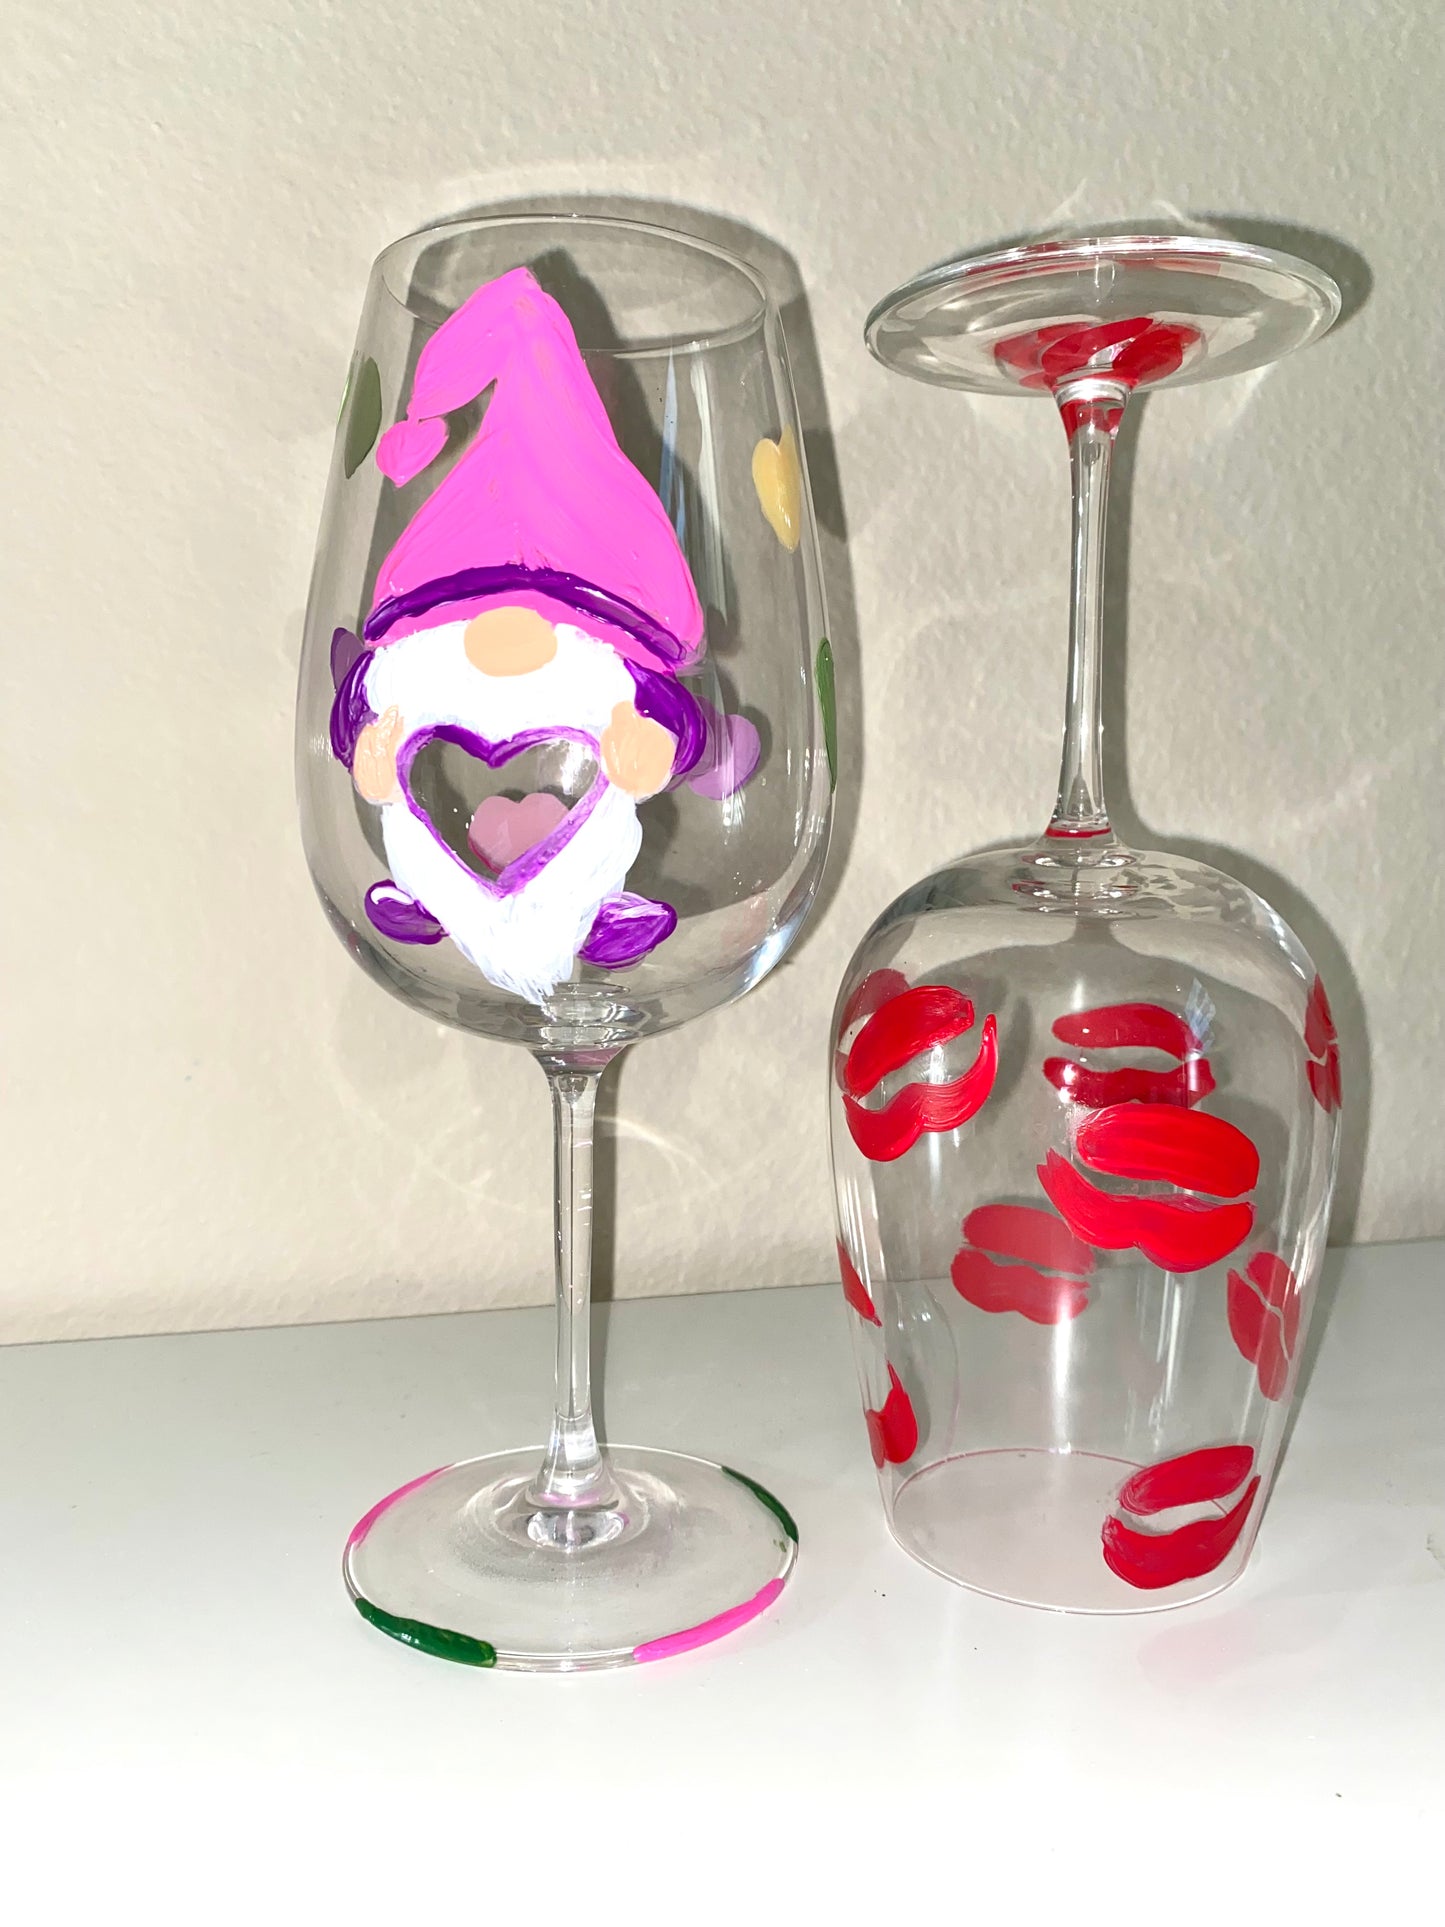 Tue, Feb 14th, 7-930p "Love" Glass Painting Houston Wine & Paint Class